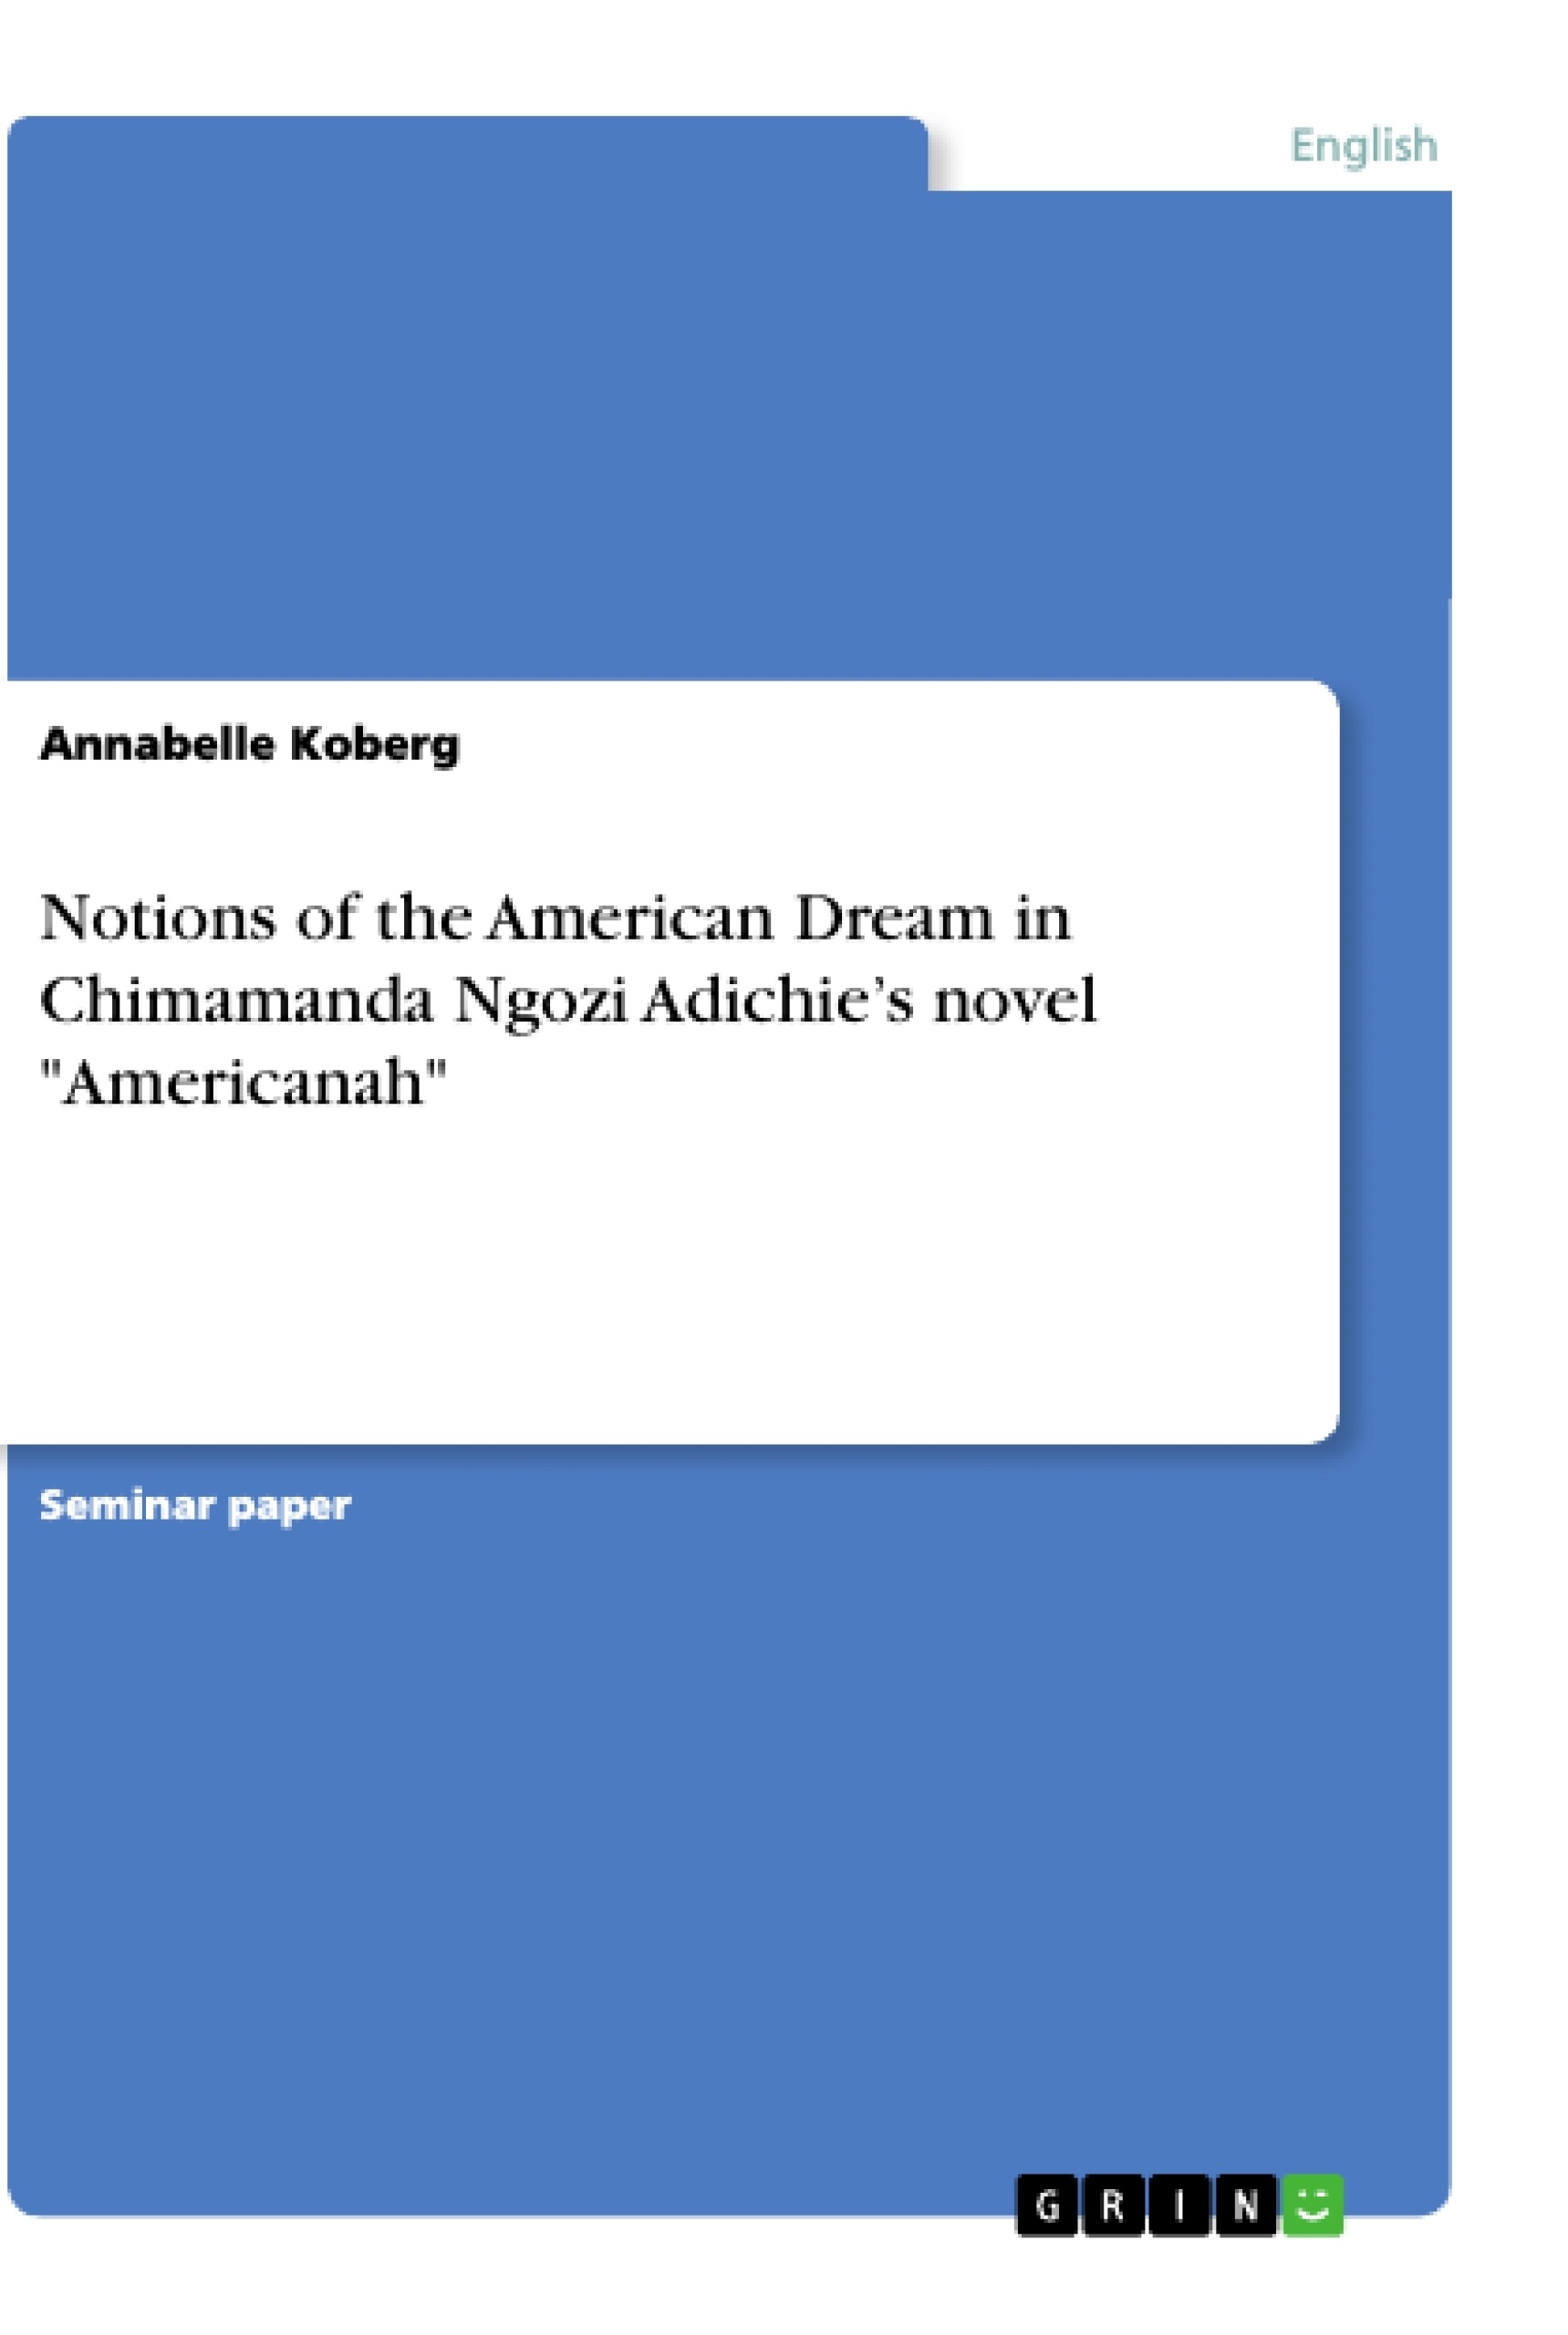 Title: Notions of the American Dream in Chimamanda Ngozi Adichie’s novel "Americanah"